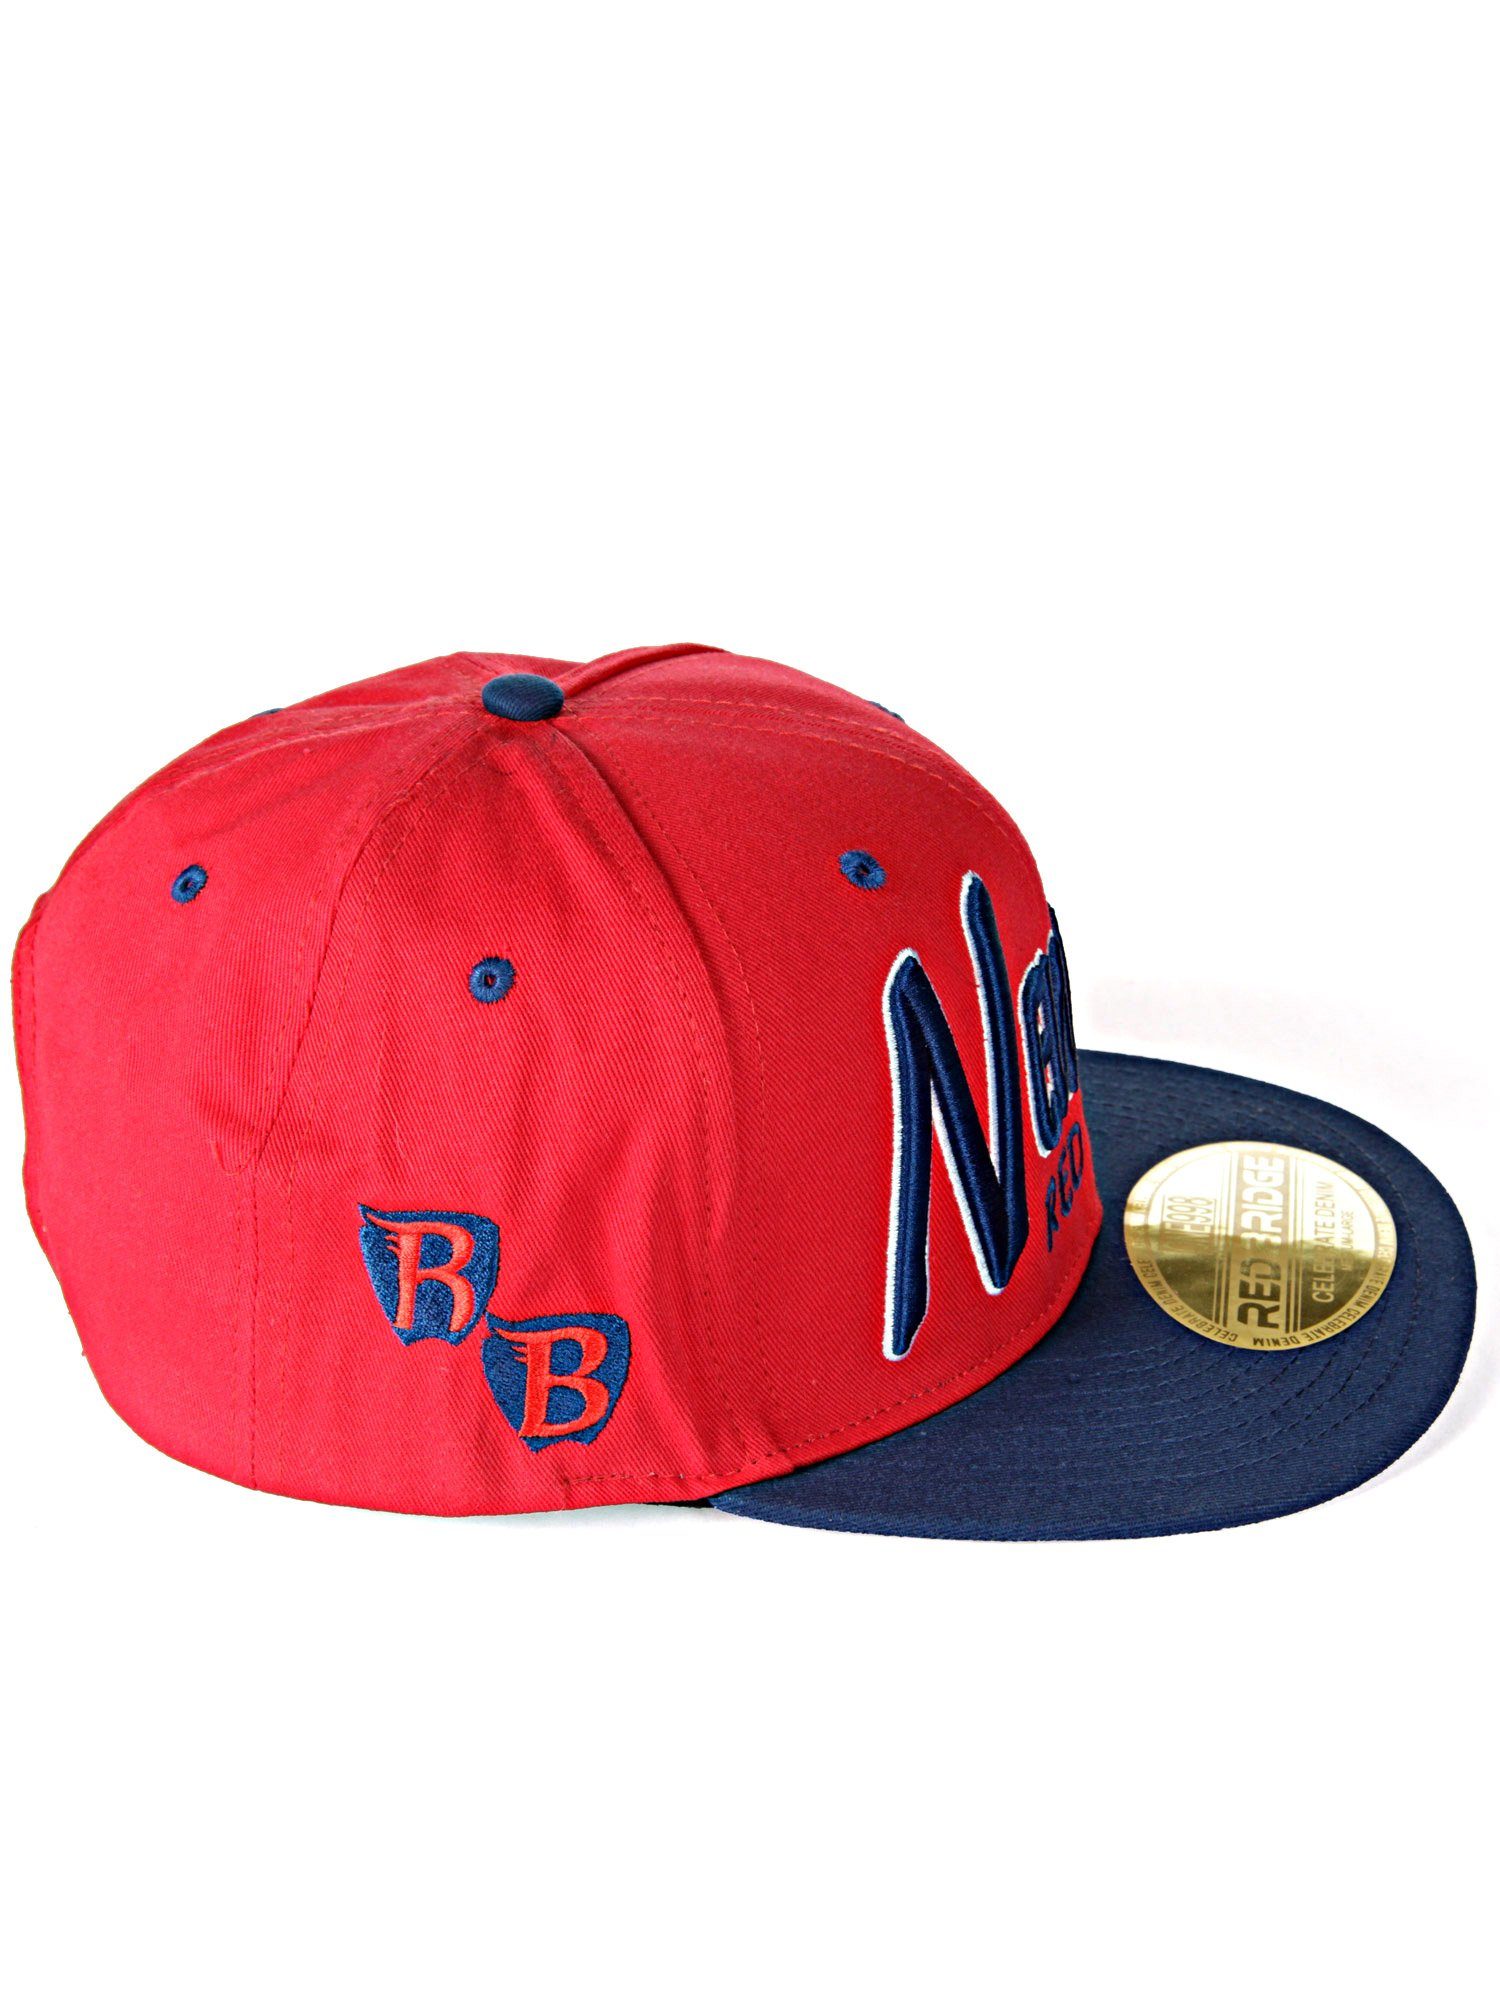 Cap Bootle dunkelblau-rot Schirm mit Baseball RedBridge kontrastfarbigem